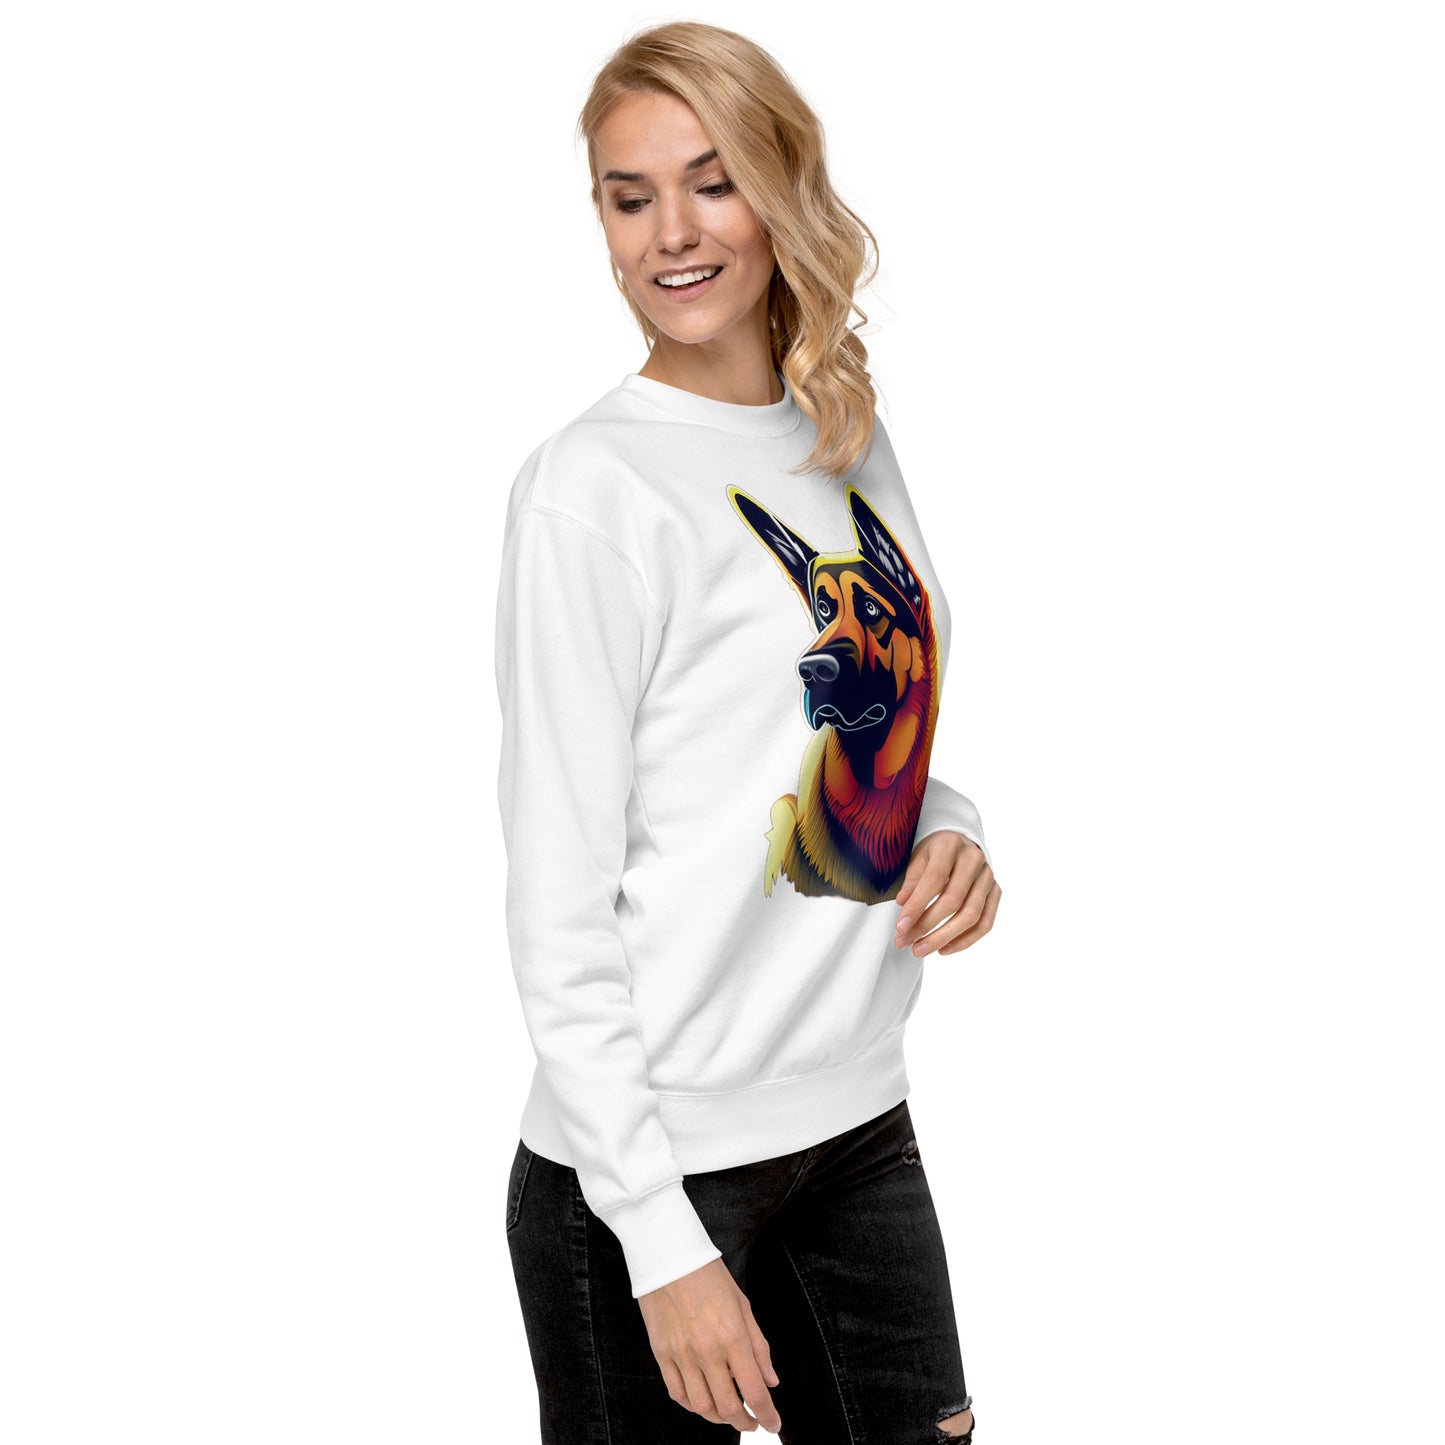 "German Shepherd" women's hooded sweatshirt